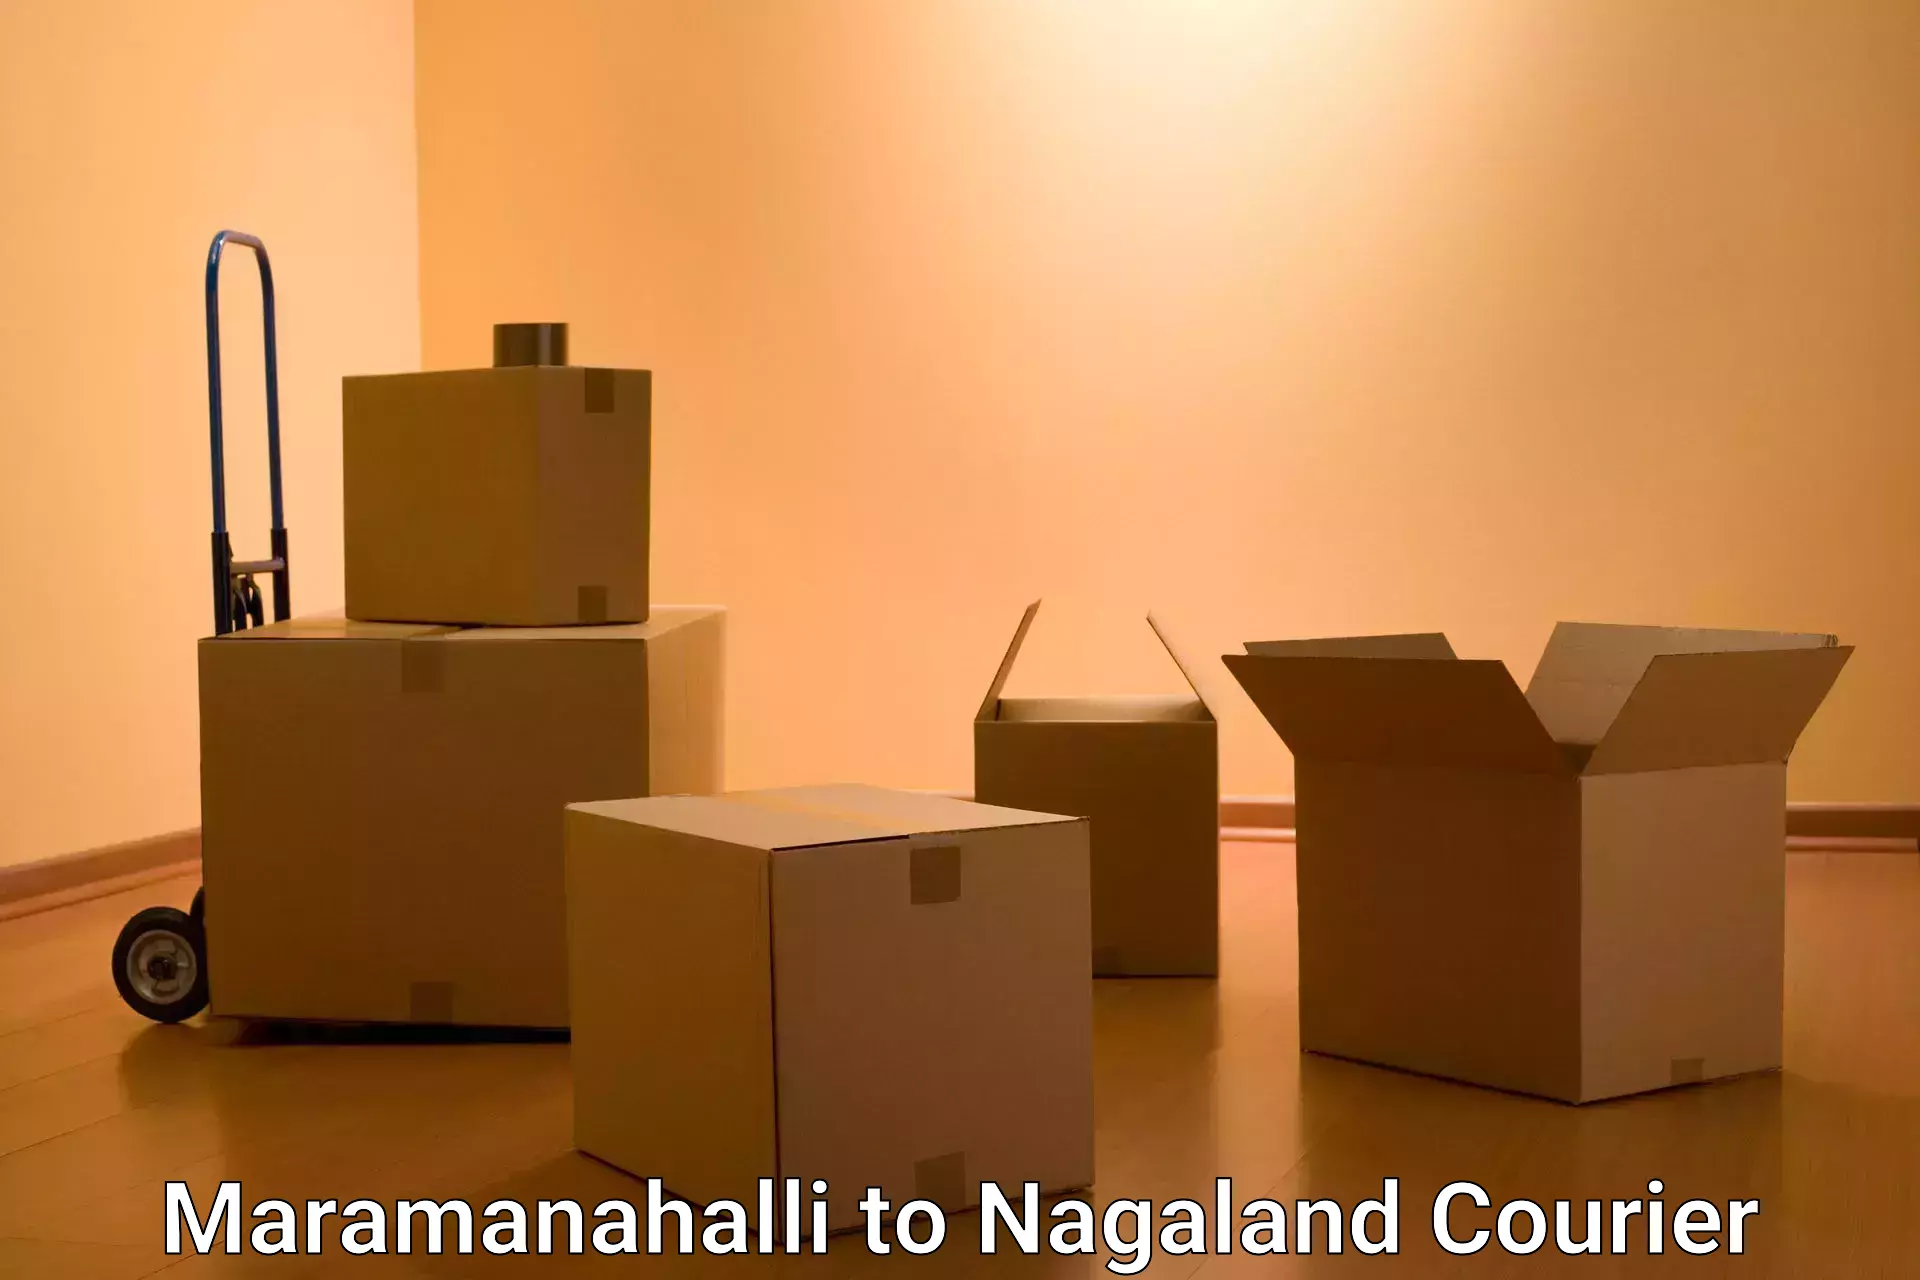 Cash on delivery service Maramanahalli to Nagaland